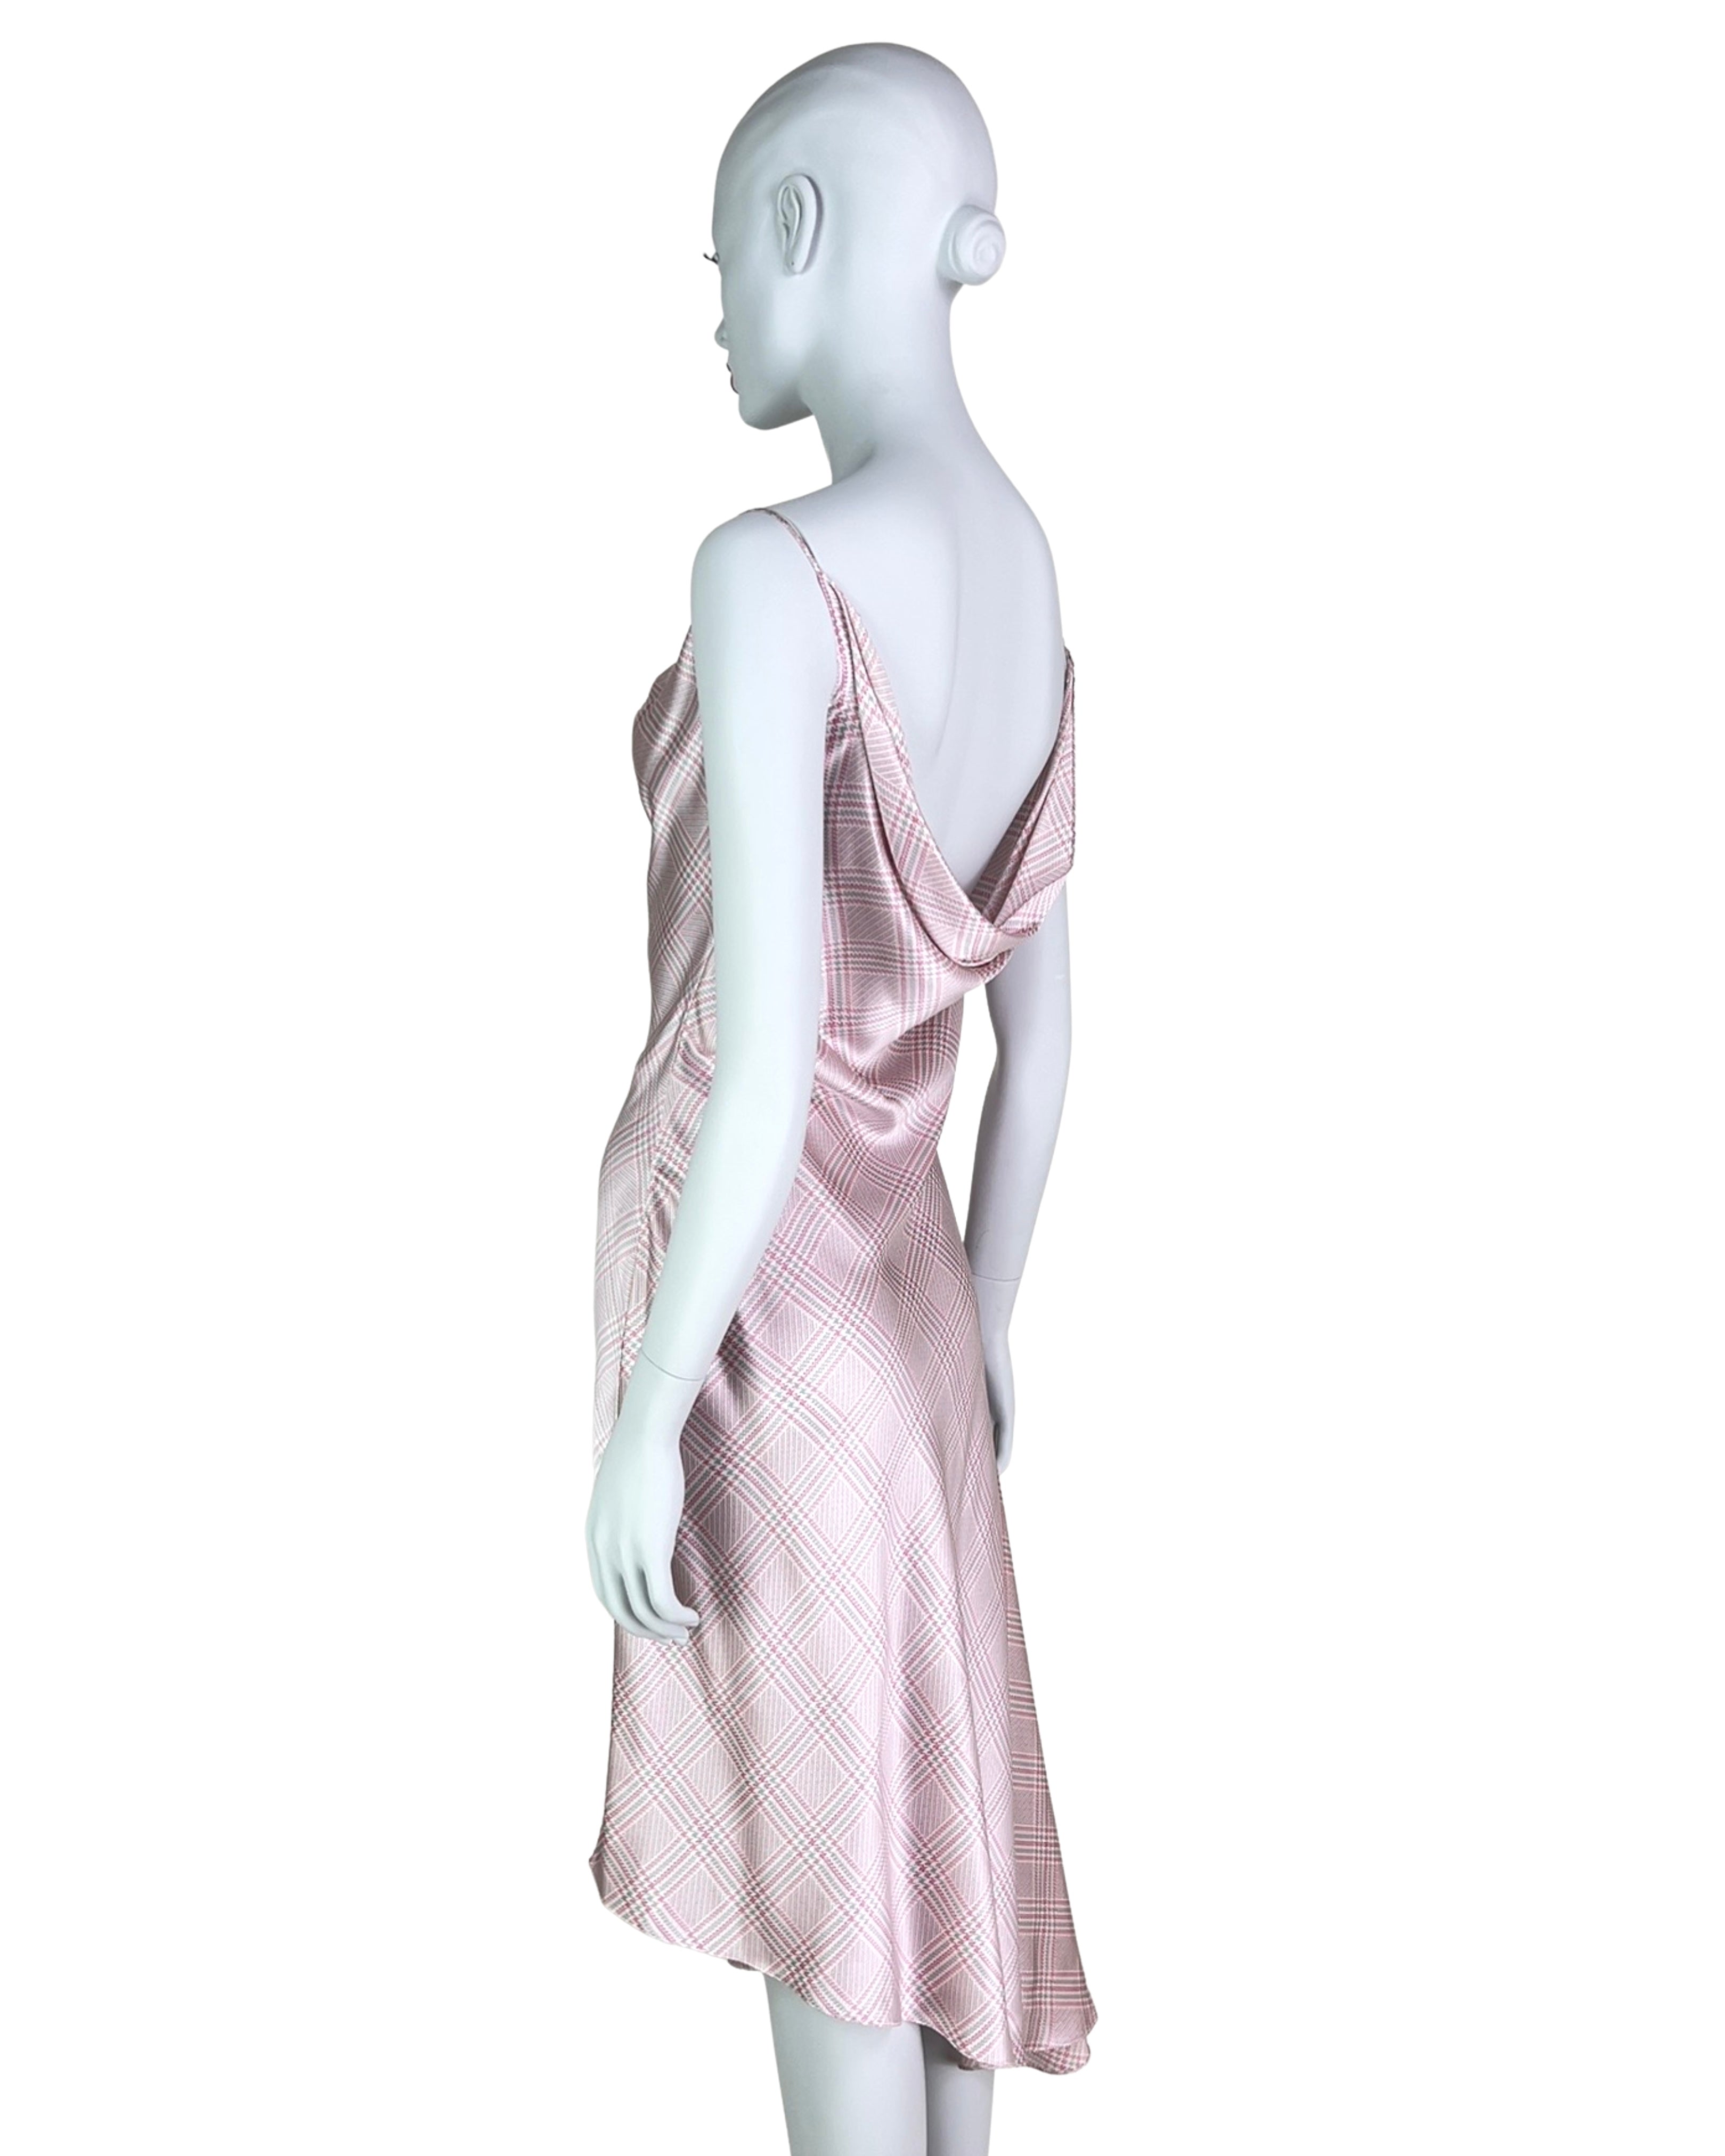 Givenchy by Alexander McQueen Spring 1998 Silk Dress